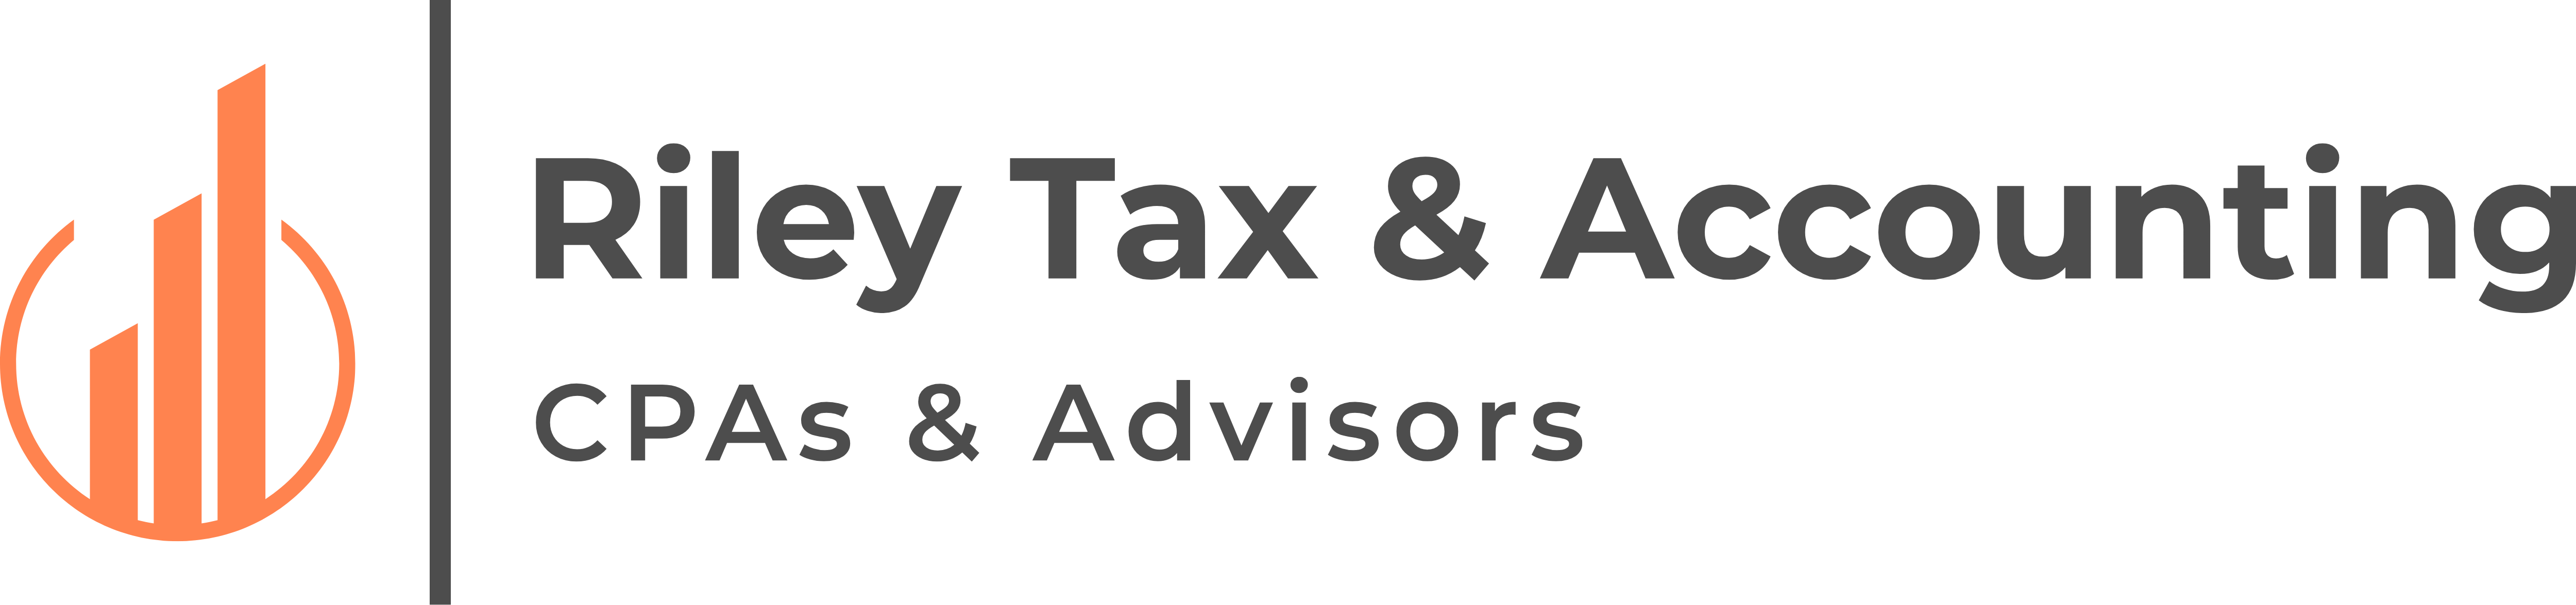 Riley Tax & Accounting